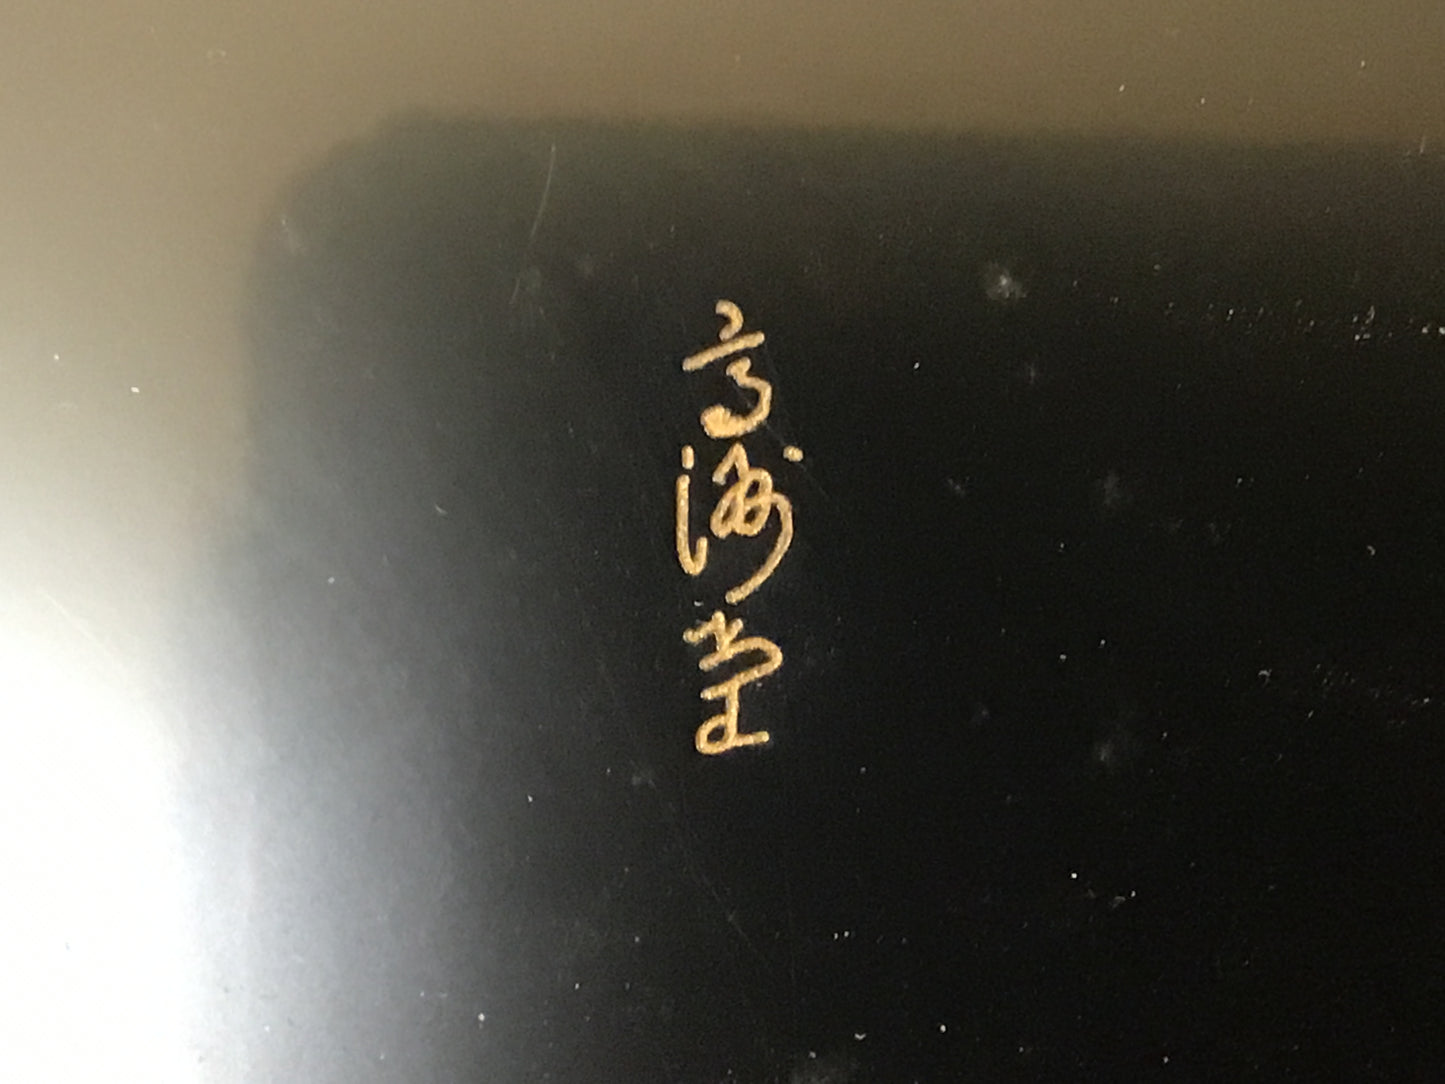 Y2648 TRAY Wajima Lacquerware OBON OZEN server signed box Japan antique vintage